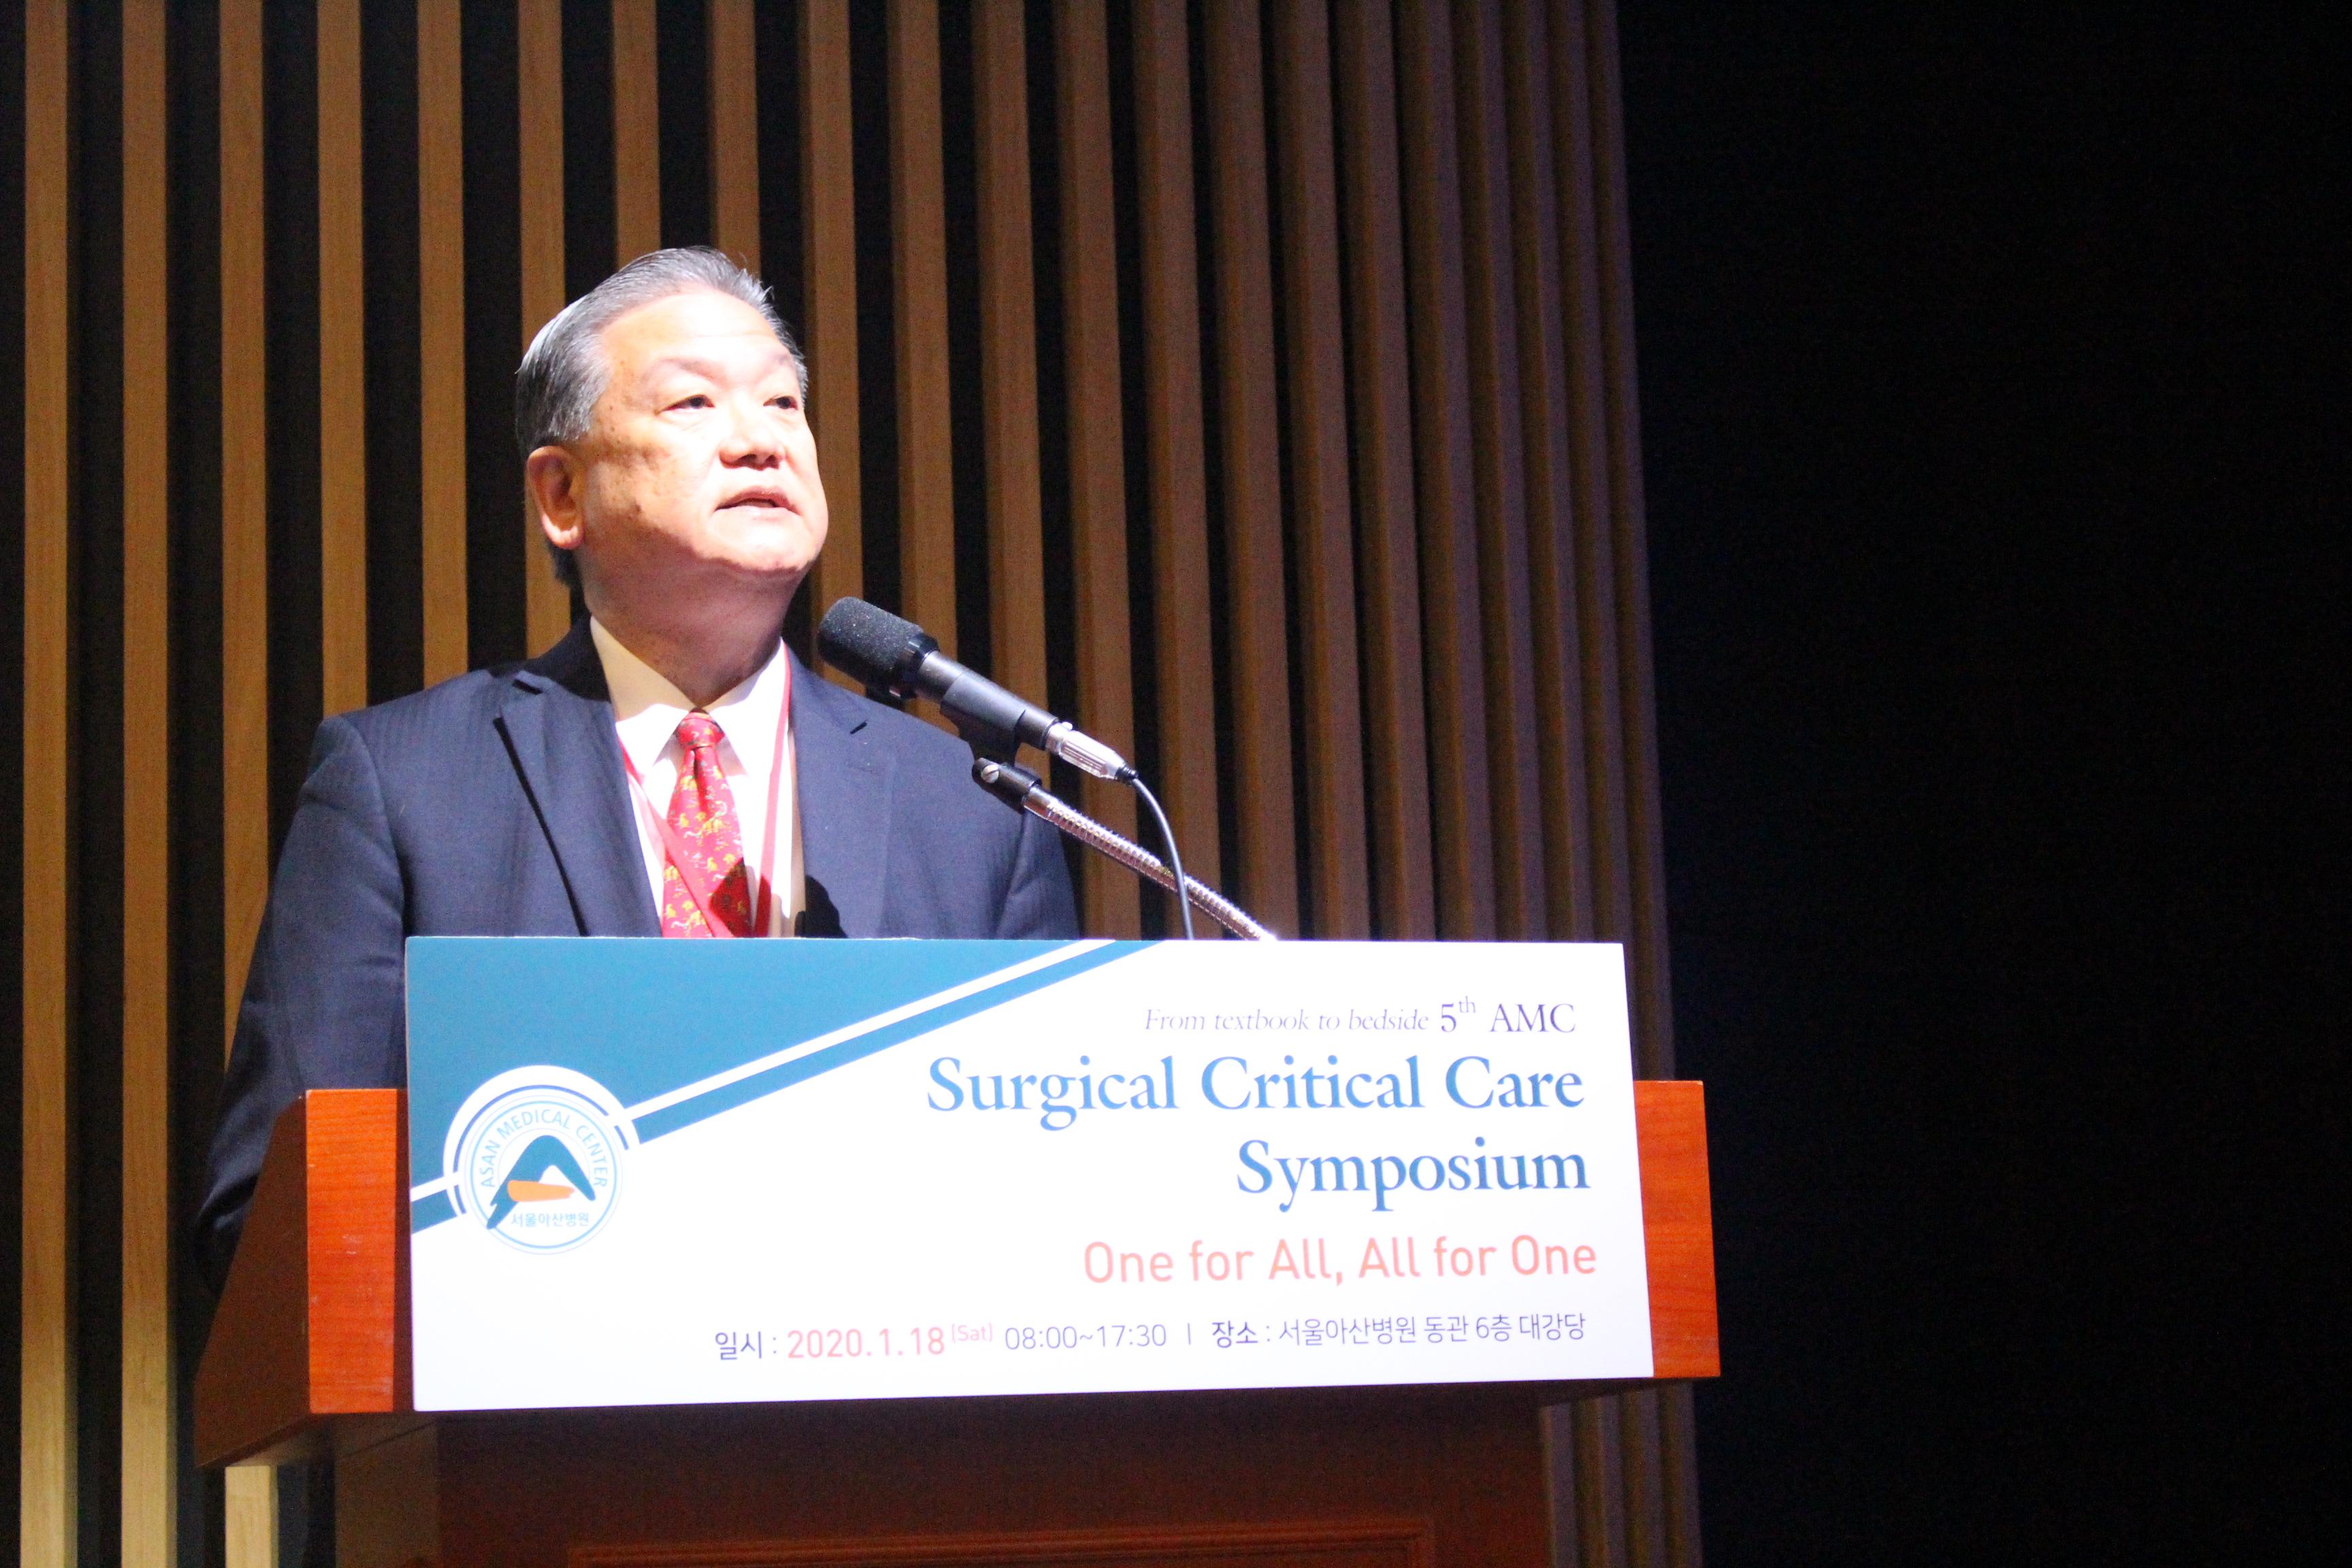 5th Surgical Critical Care Symposium